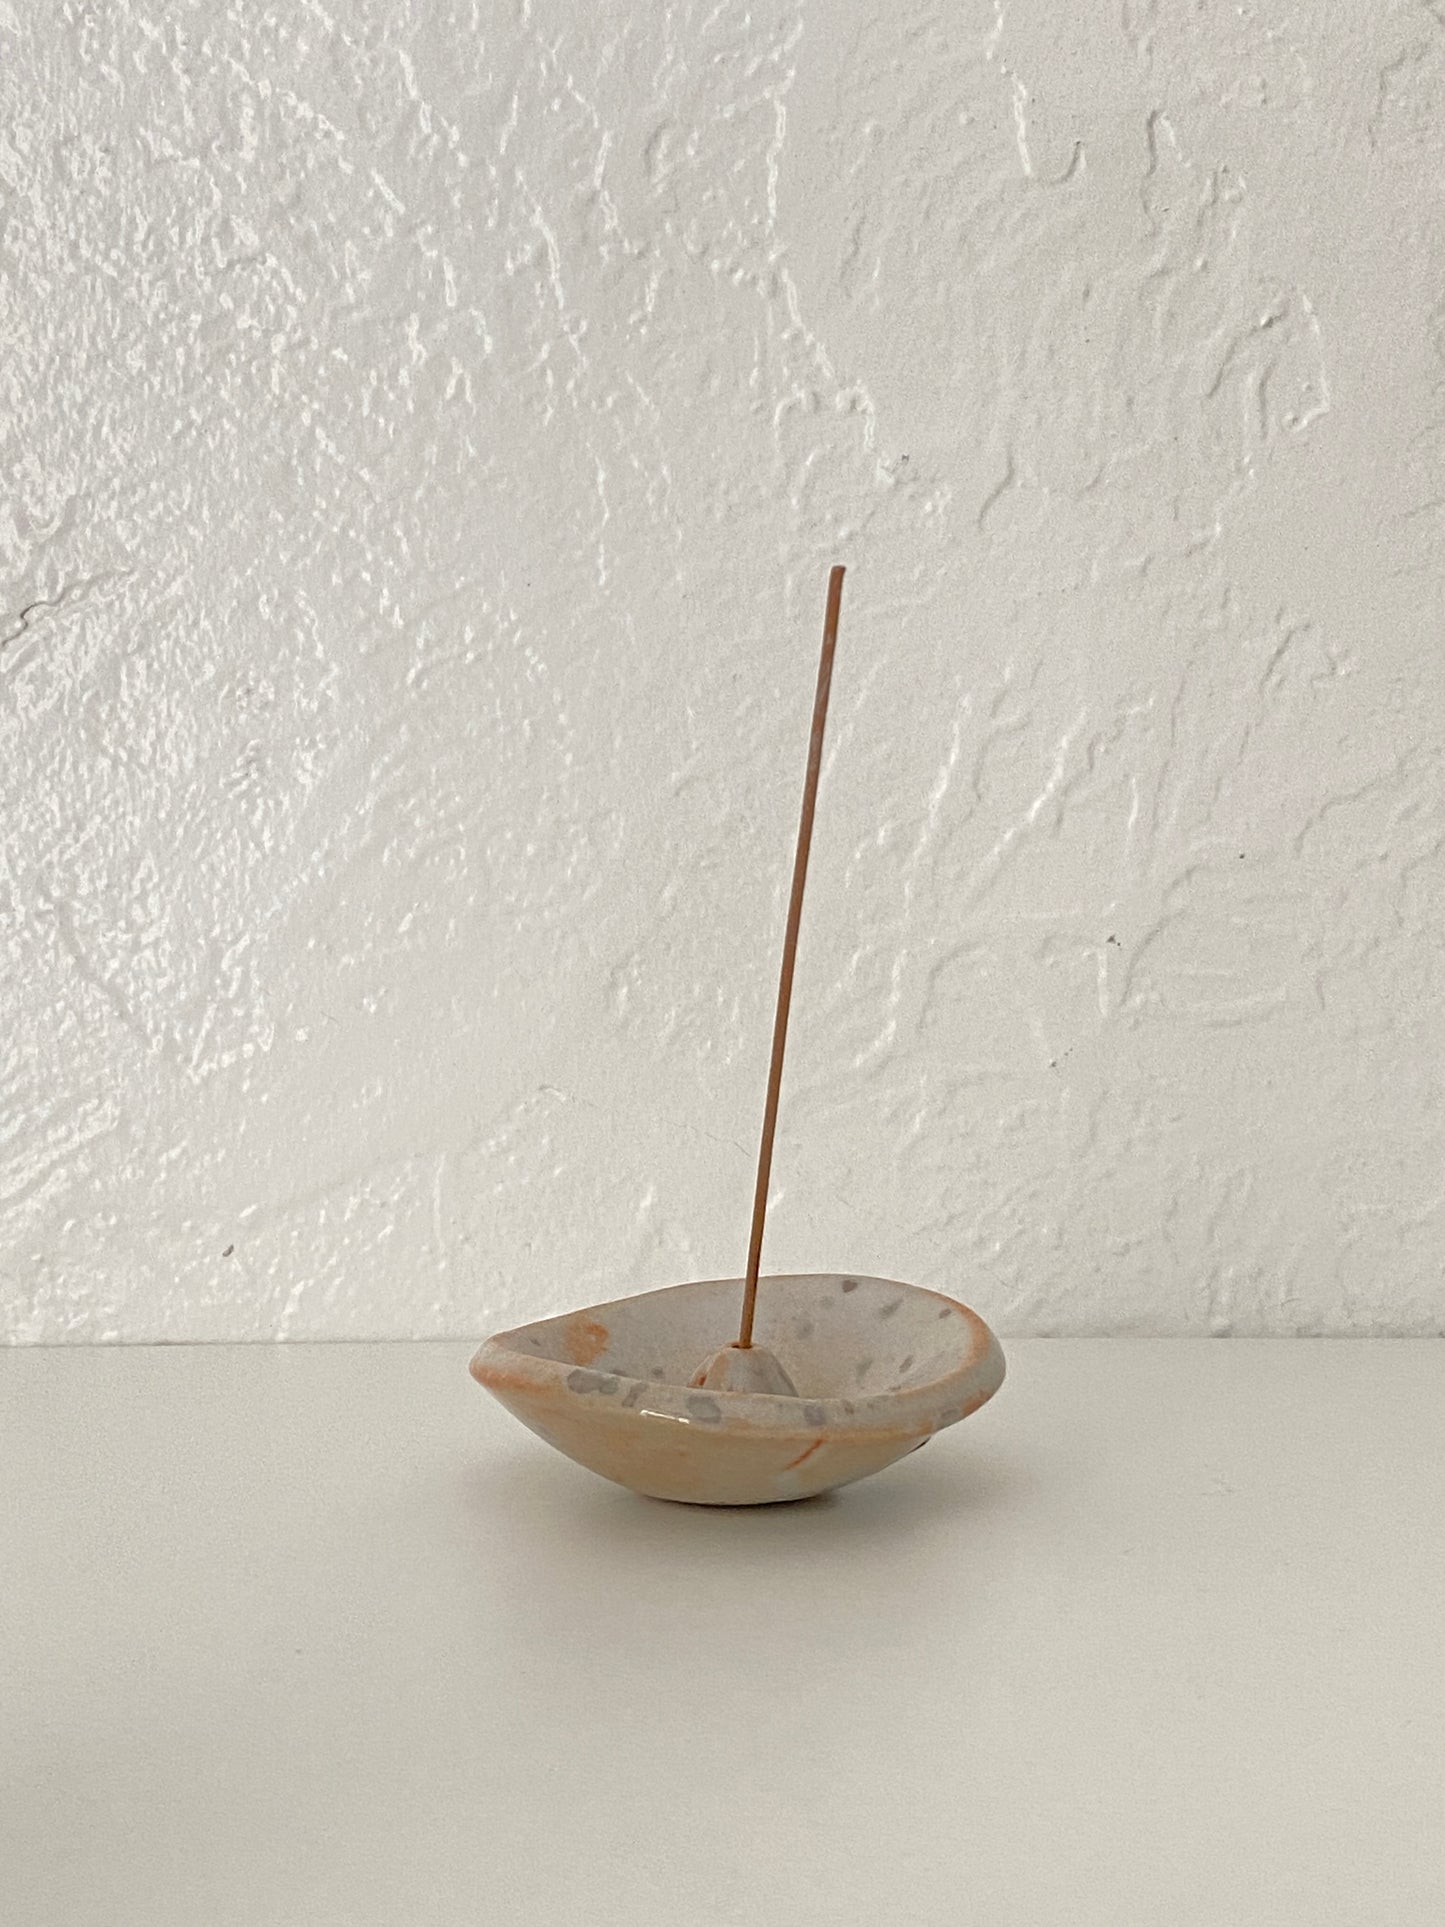 shino fired porcelain incense burner - #3